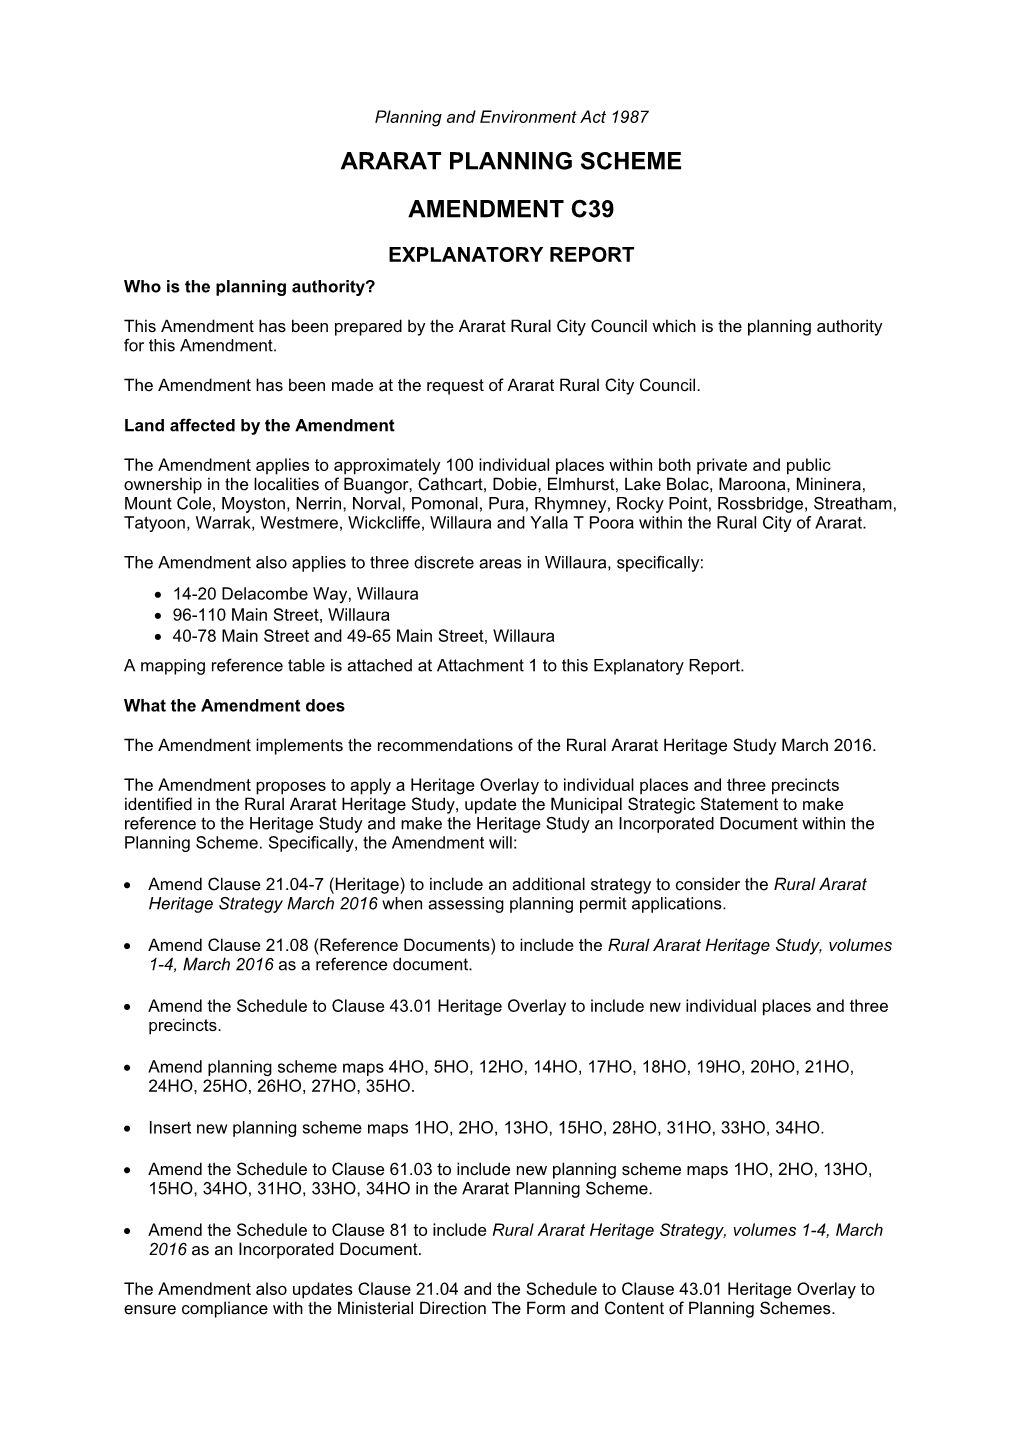 Ararat Planning Scheme Amendment C39